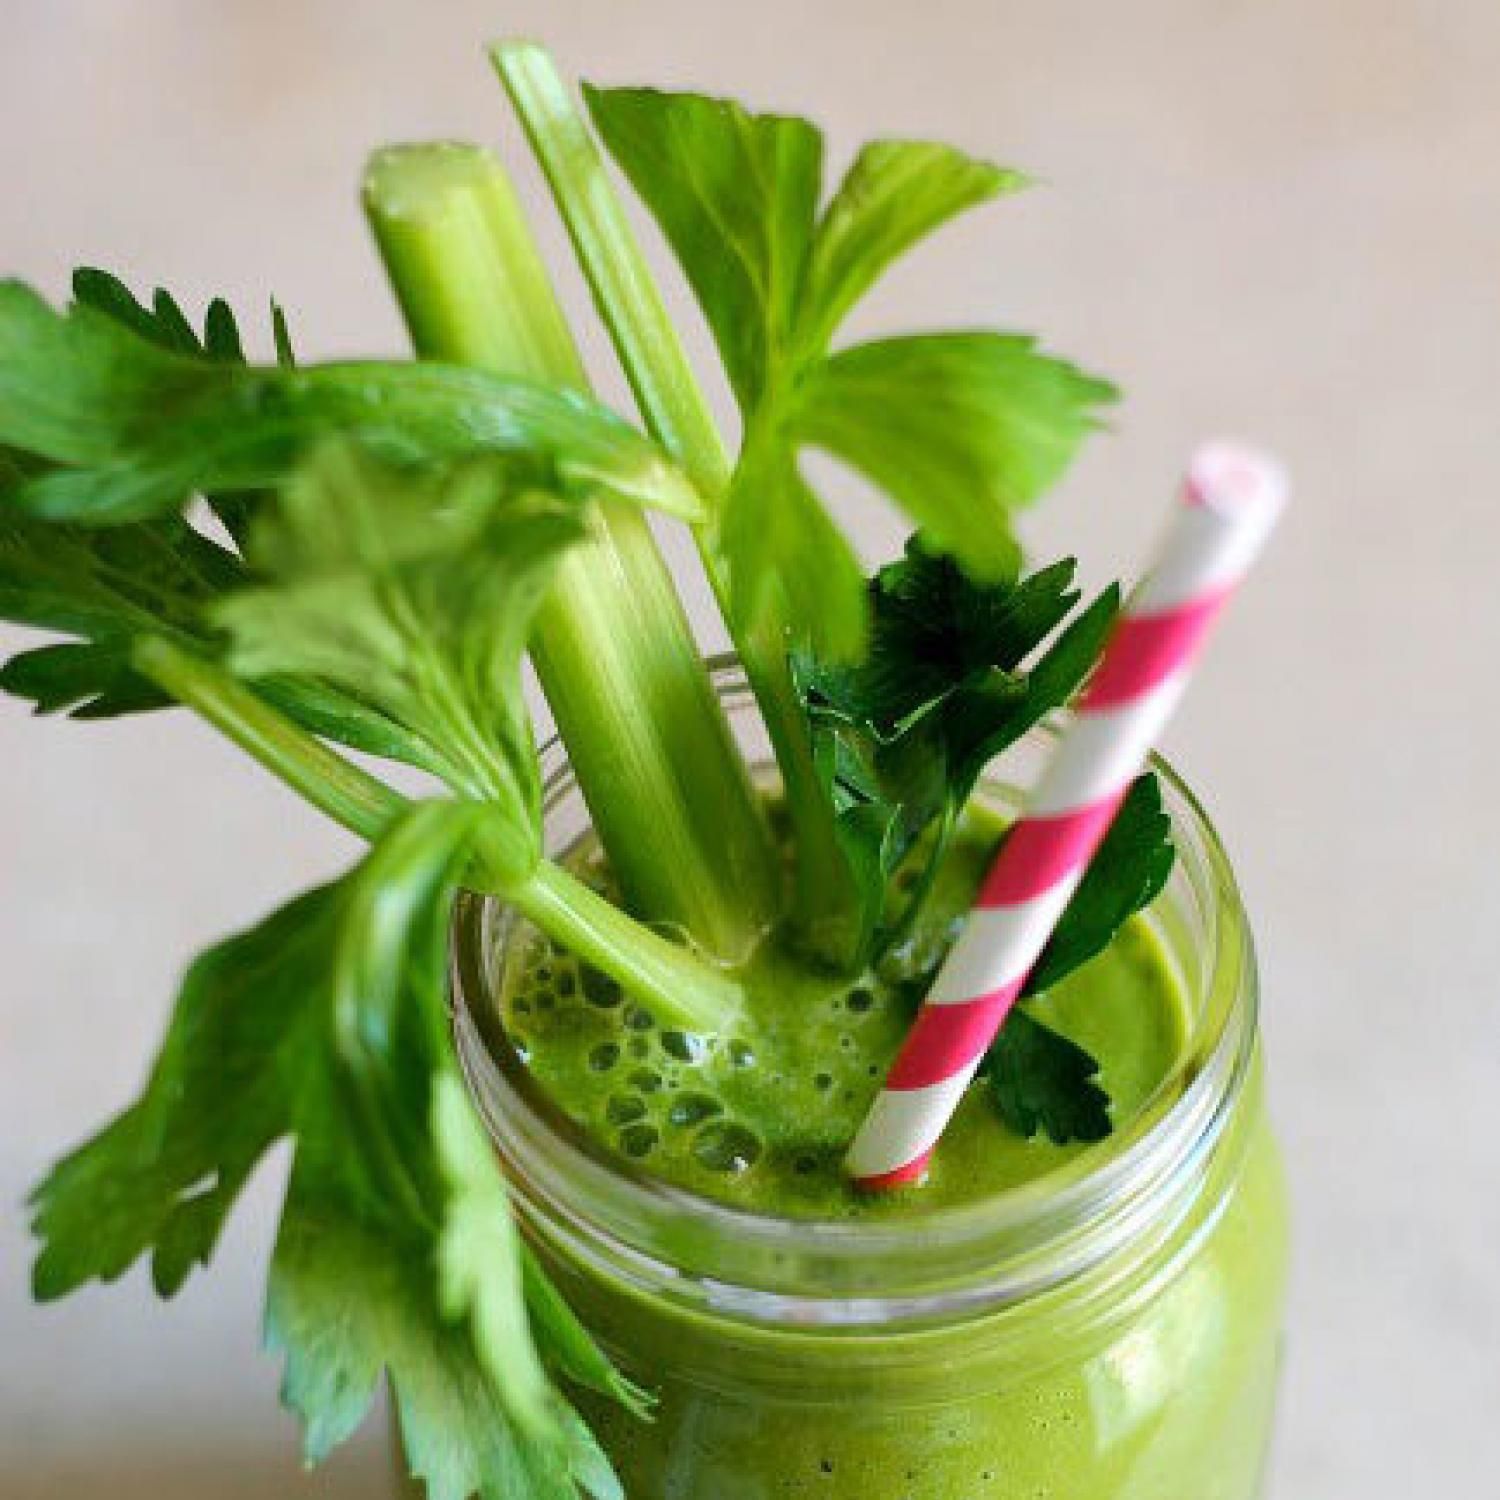 23 veggie smoothie recipes
 ideas